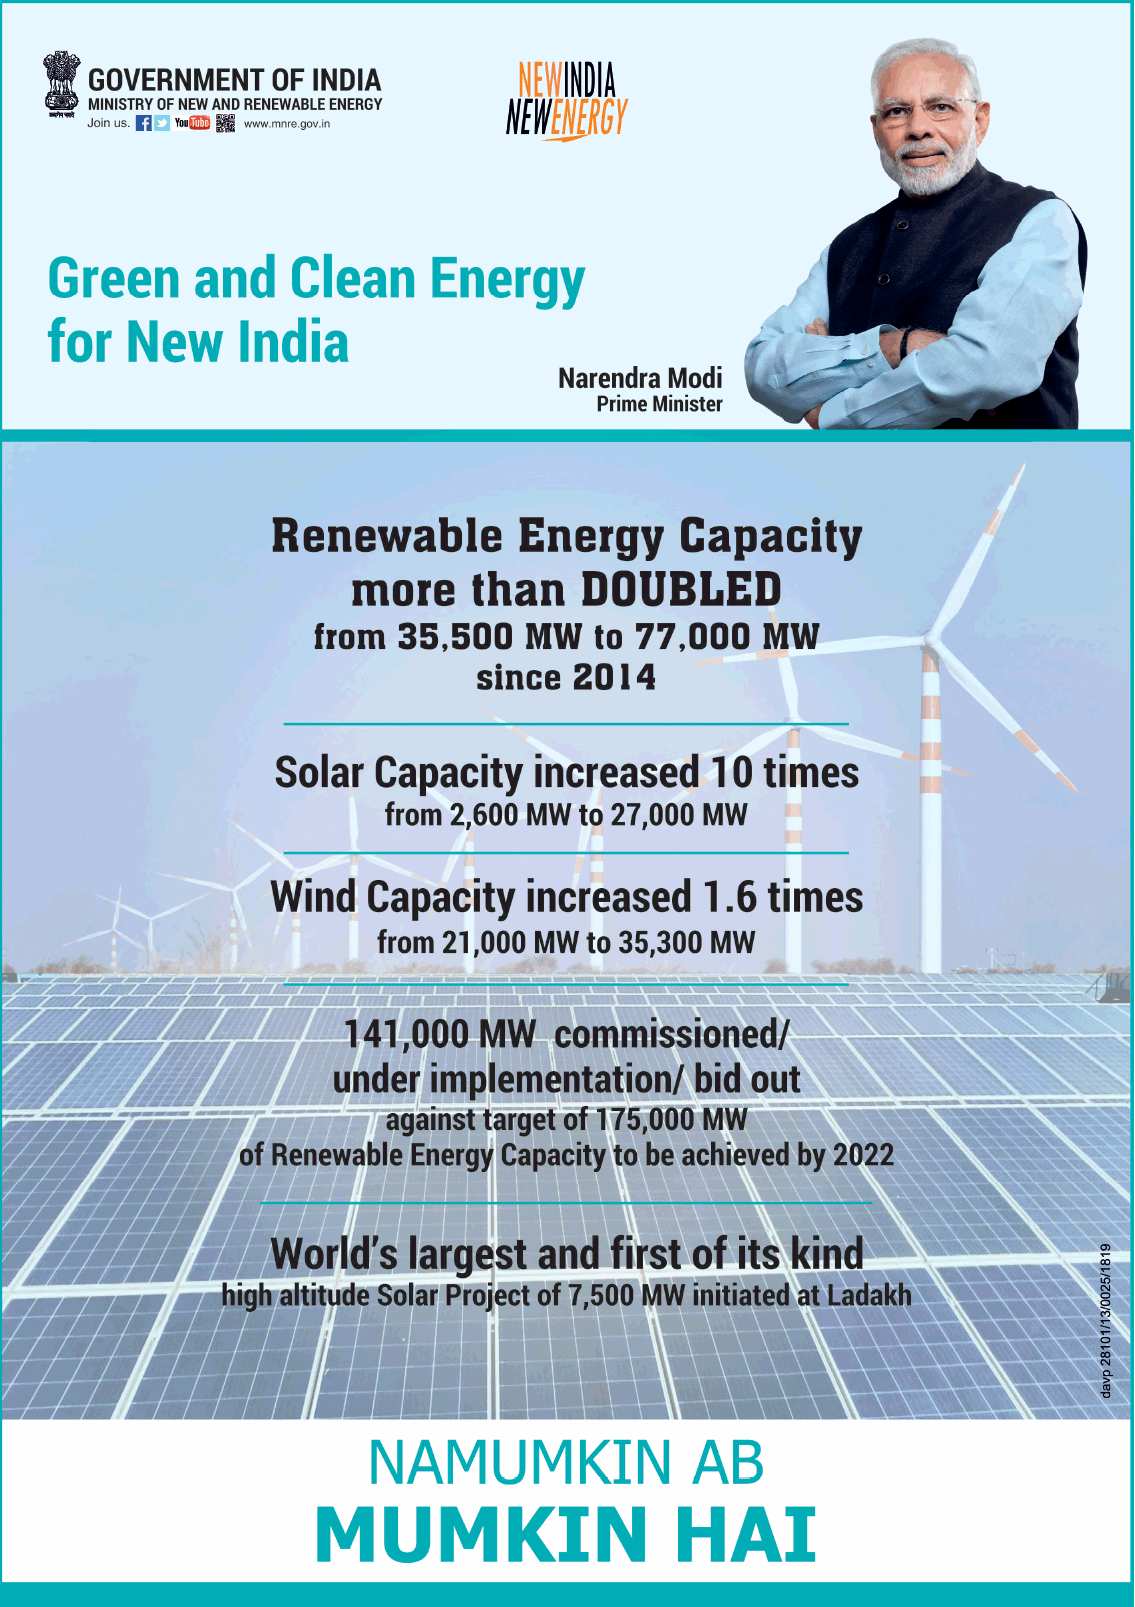 namumkin-ab-mumkin-hai-green-and-clean-energy-for-new-india-ad-times-of-india-delhi-10-03-2019.png